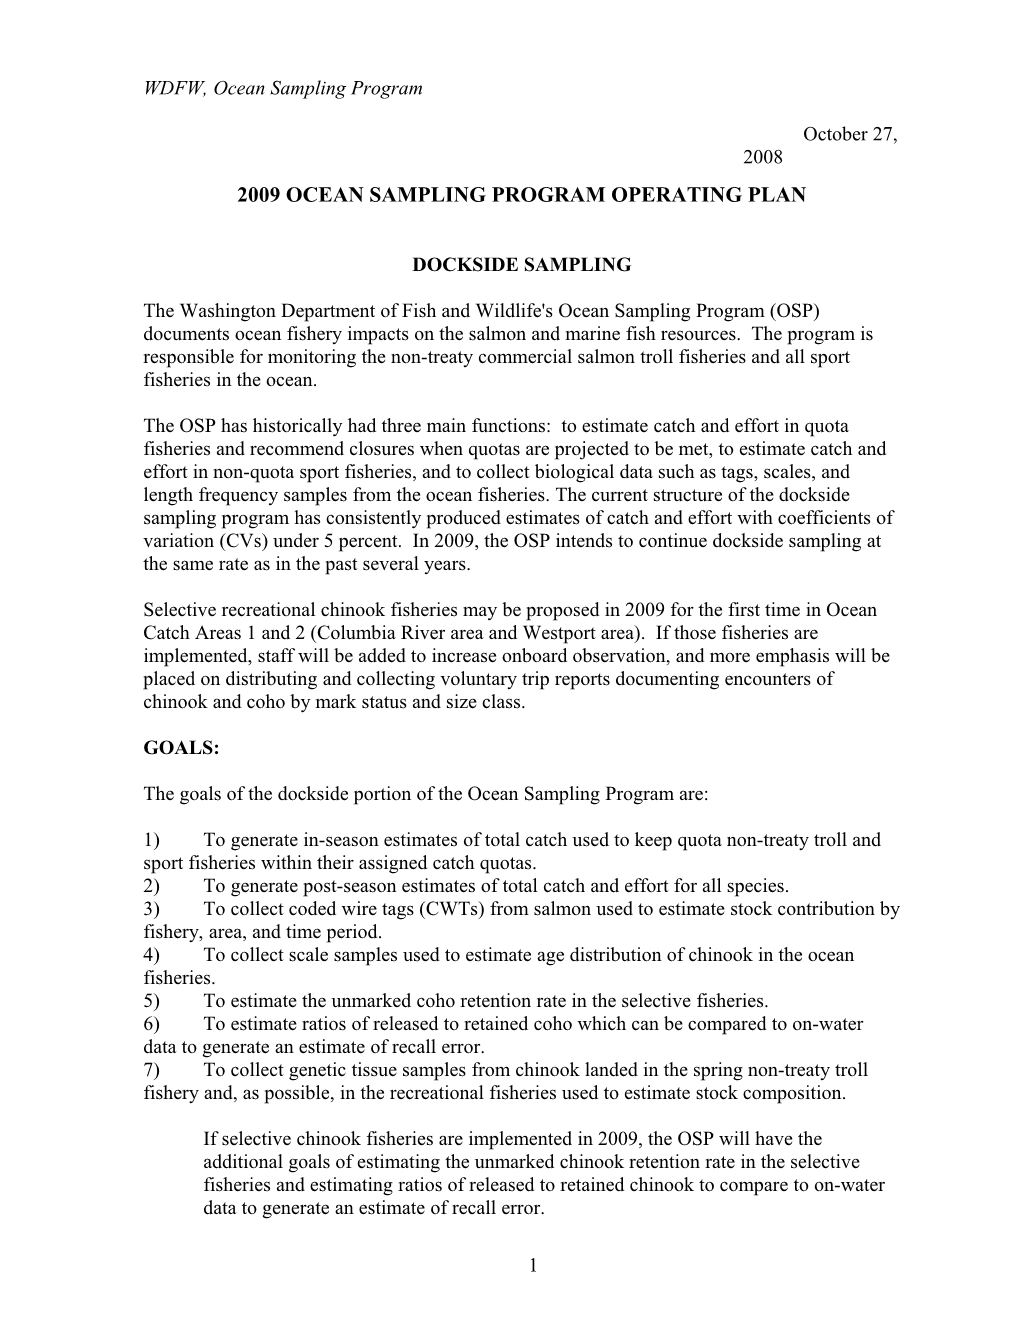 2007 Ocean Sampling Program Operating Plan